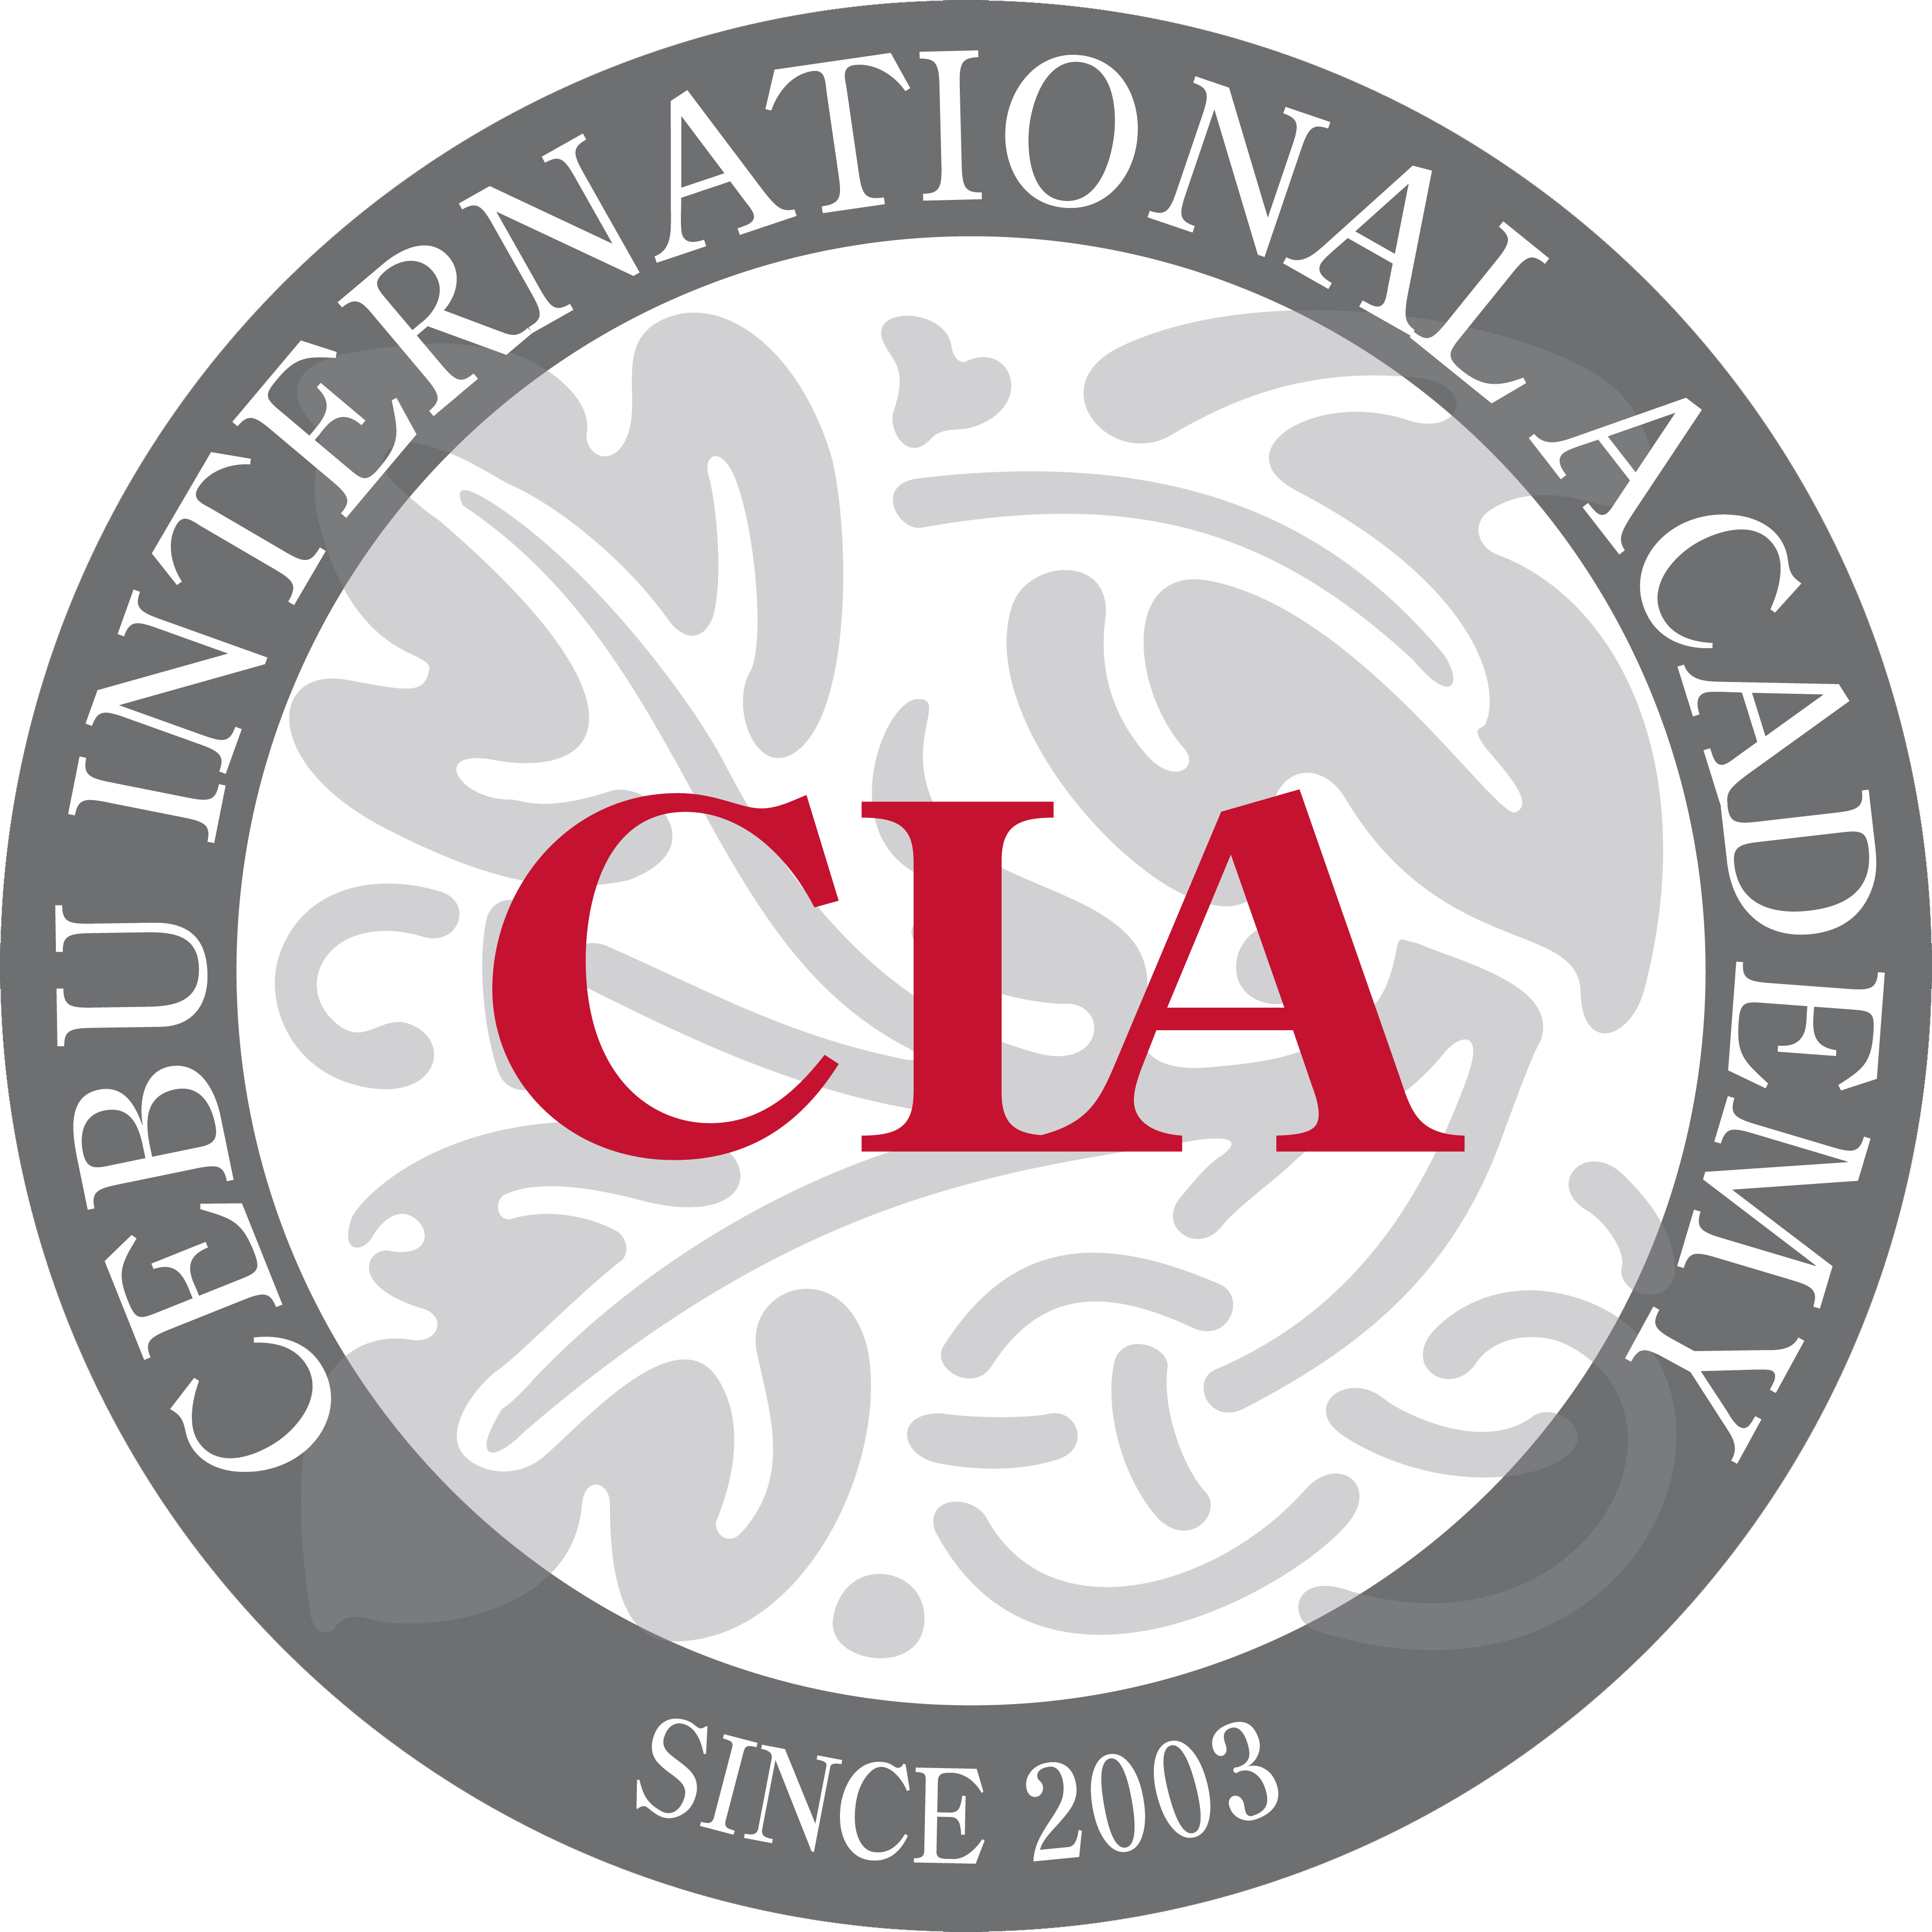 Cebu International Academy （CIA）